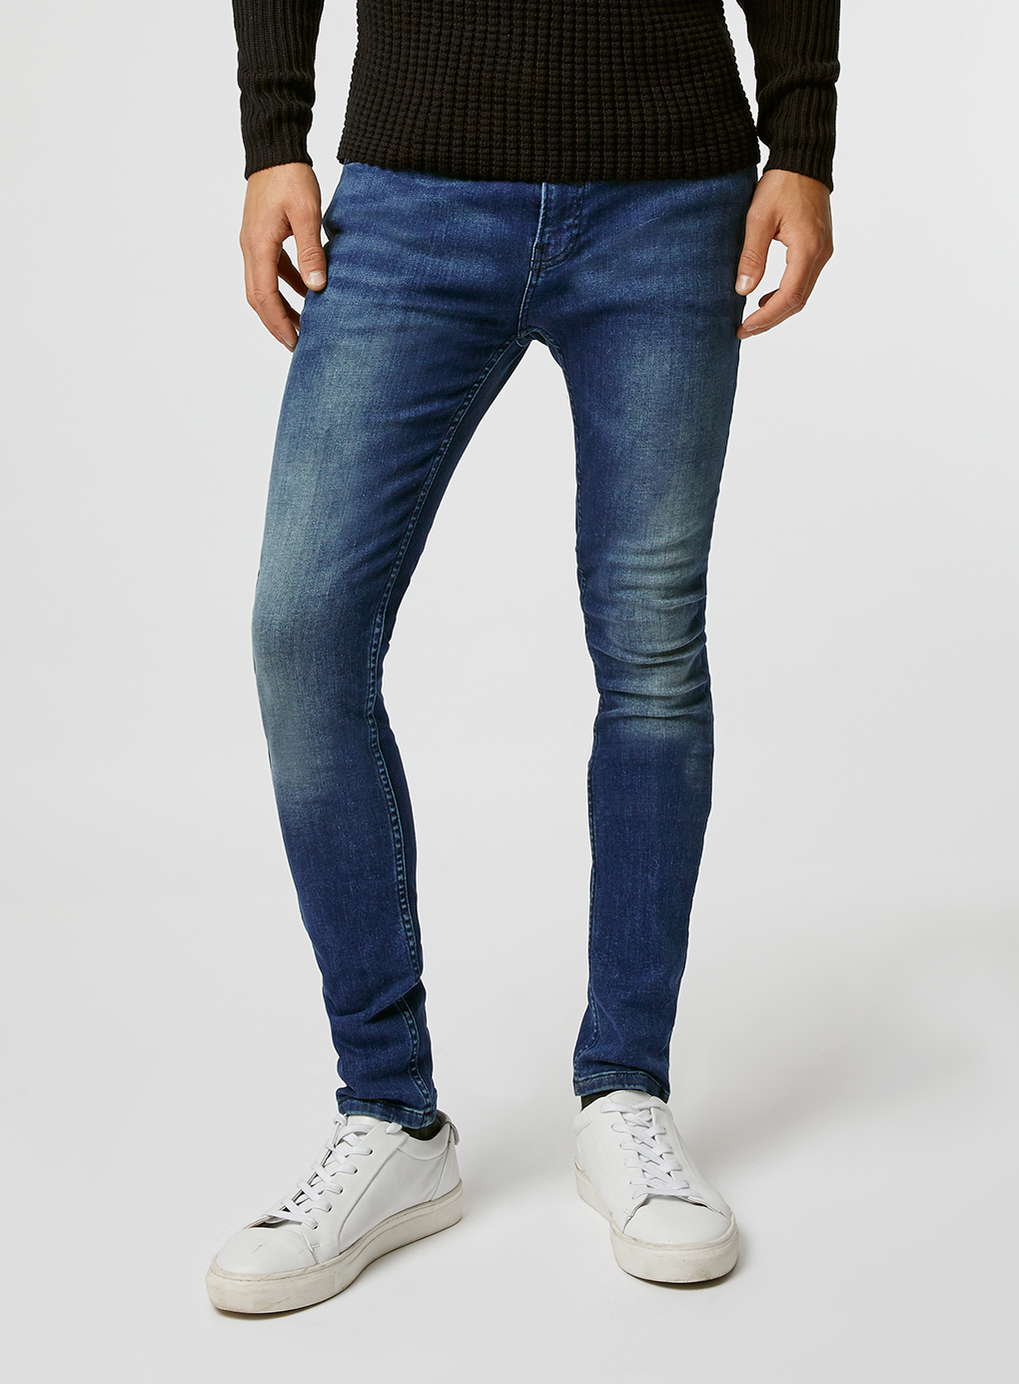 topman-spray-on-skinny-jeans